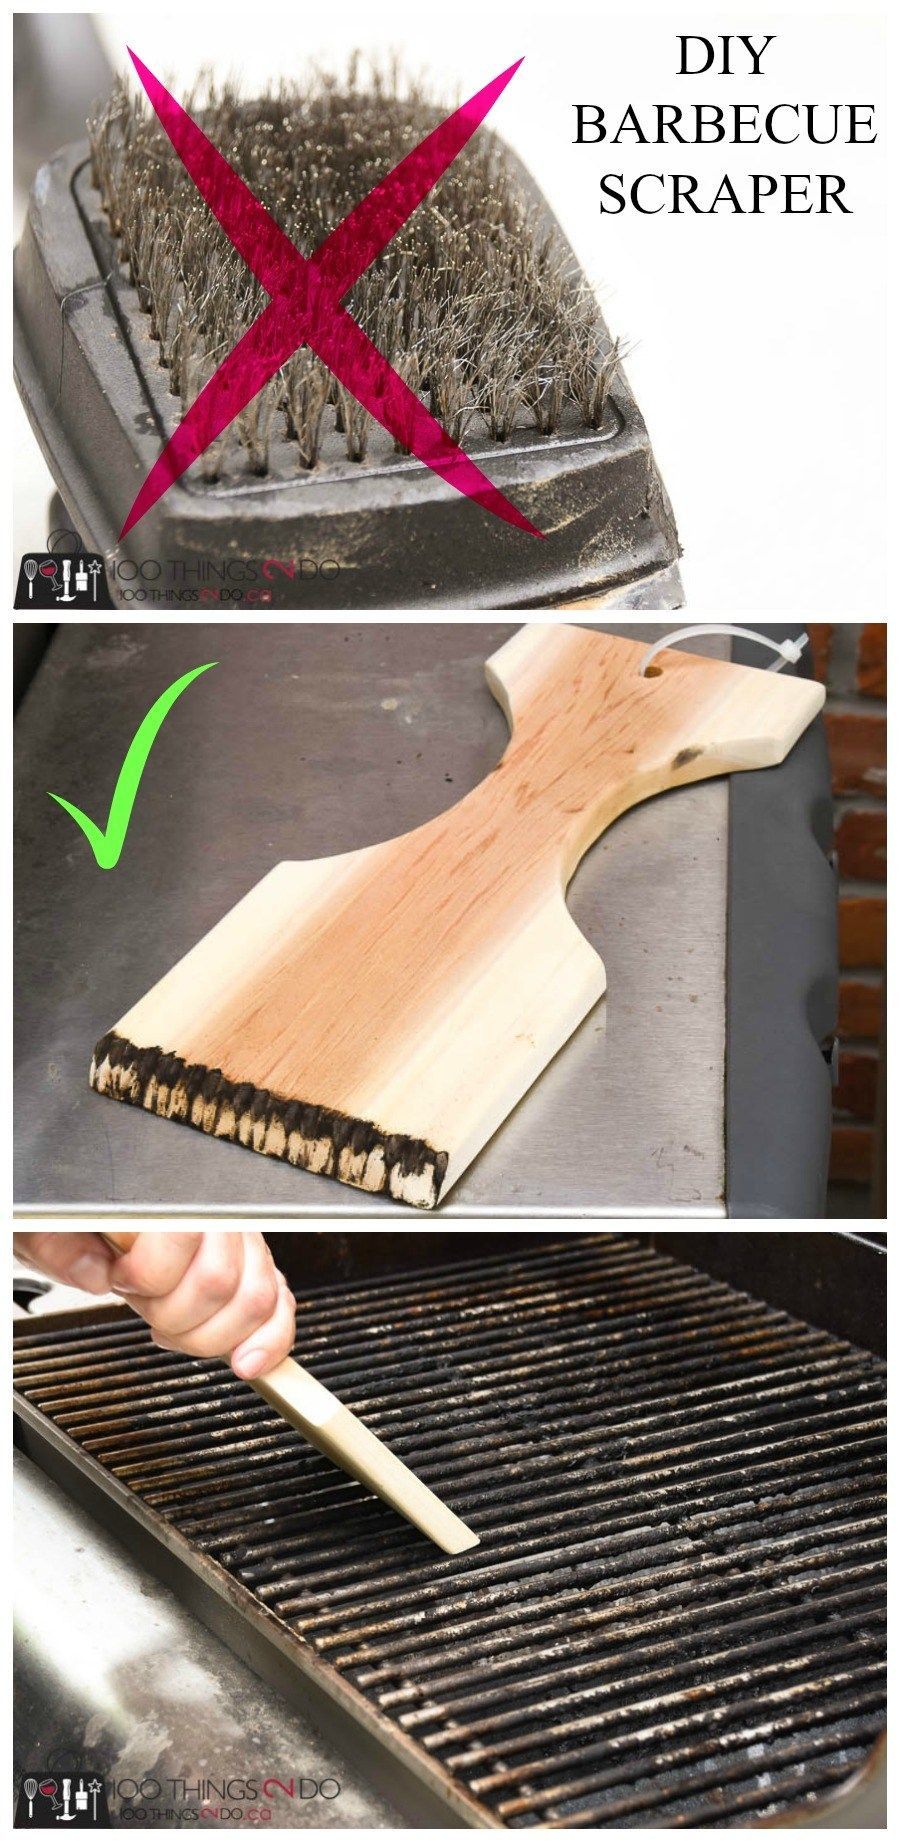 DIY Wood Grill Scraper
 DIY Barbecue Scraper 10 minutes and free DIY